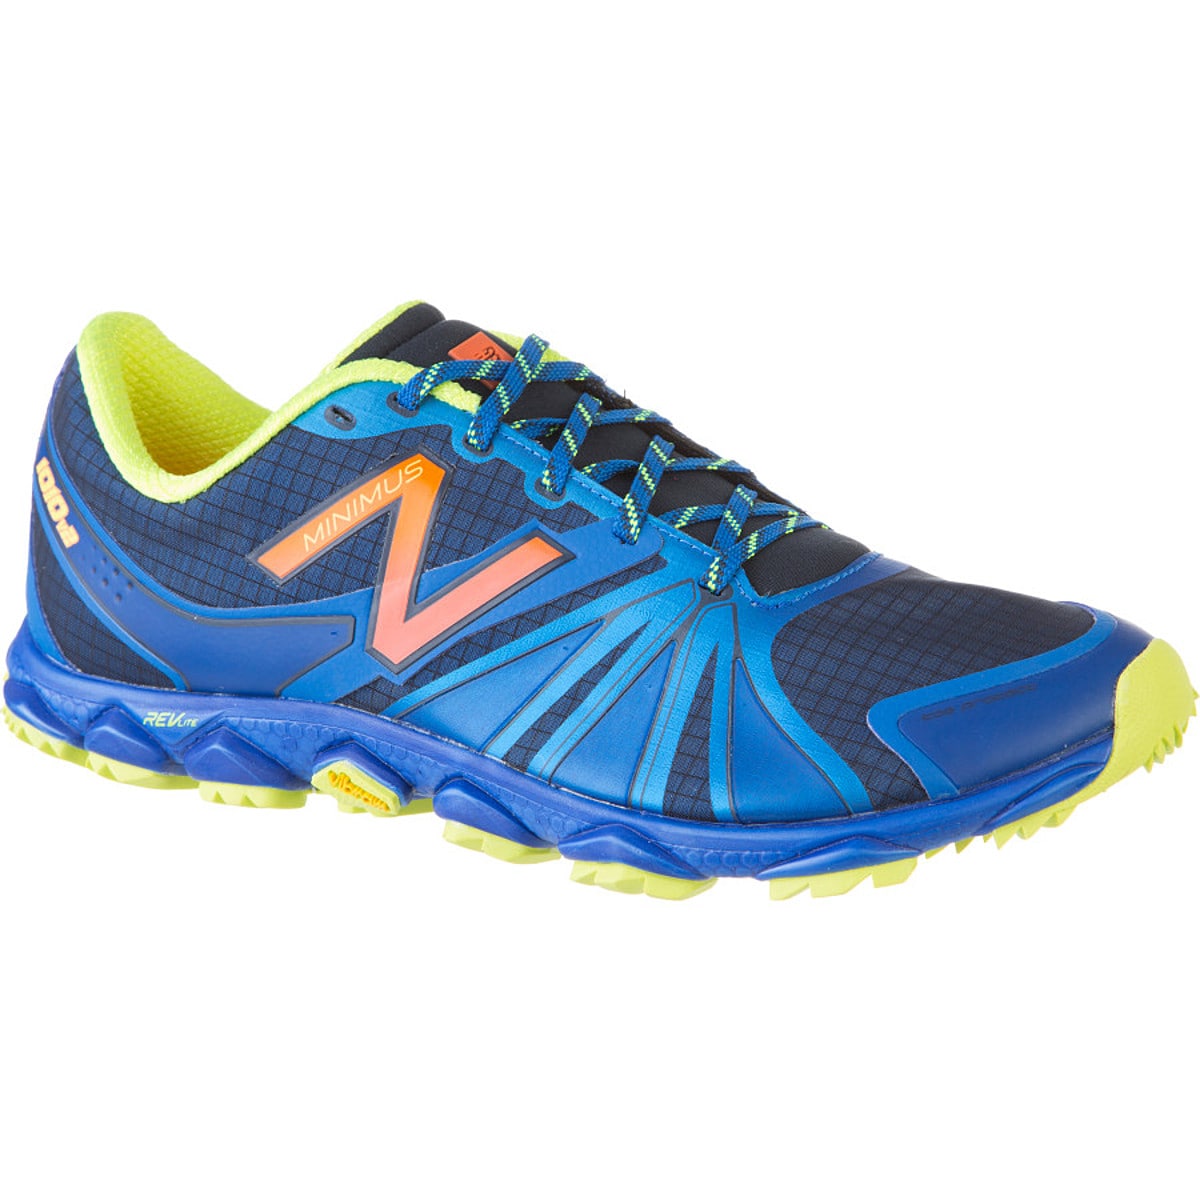 New Balance MT1010v2 Minimus Trail Running Shoe - Men's - Footwear